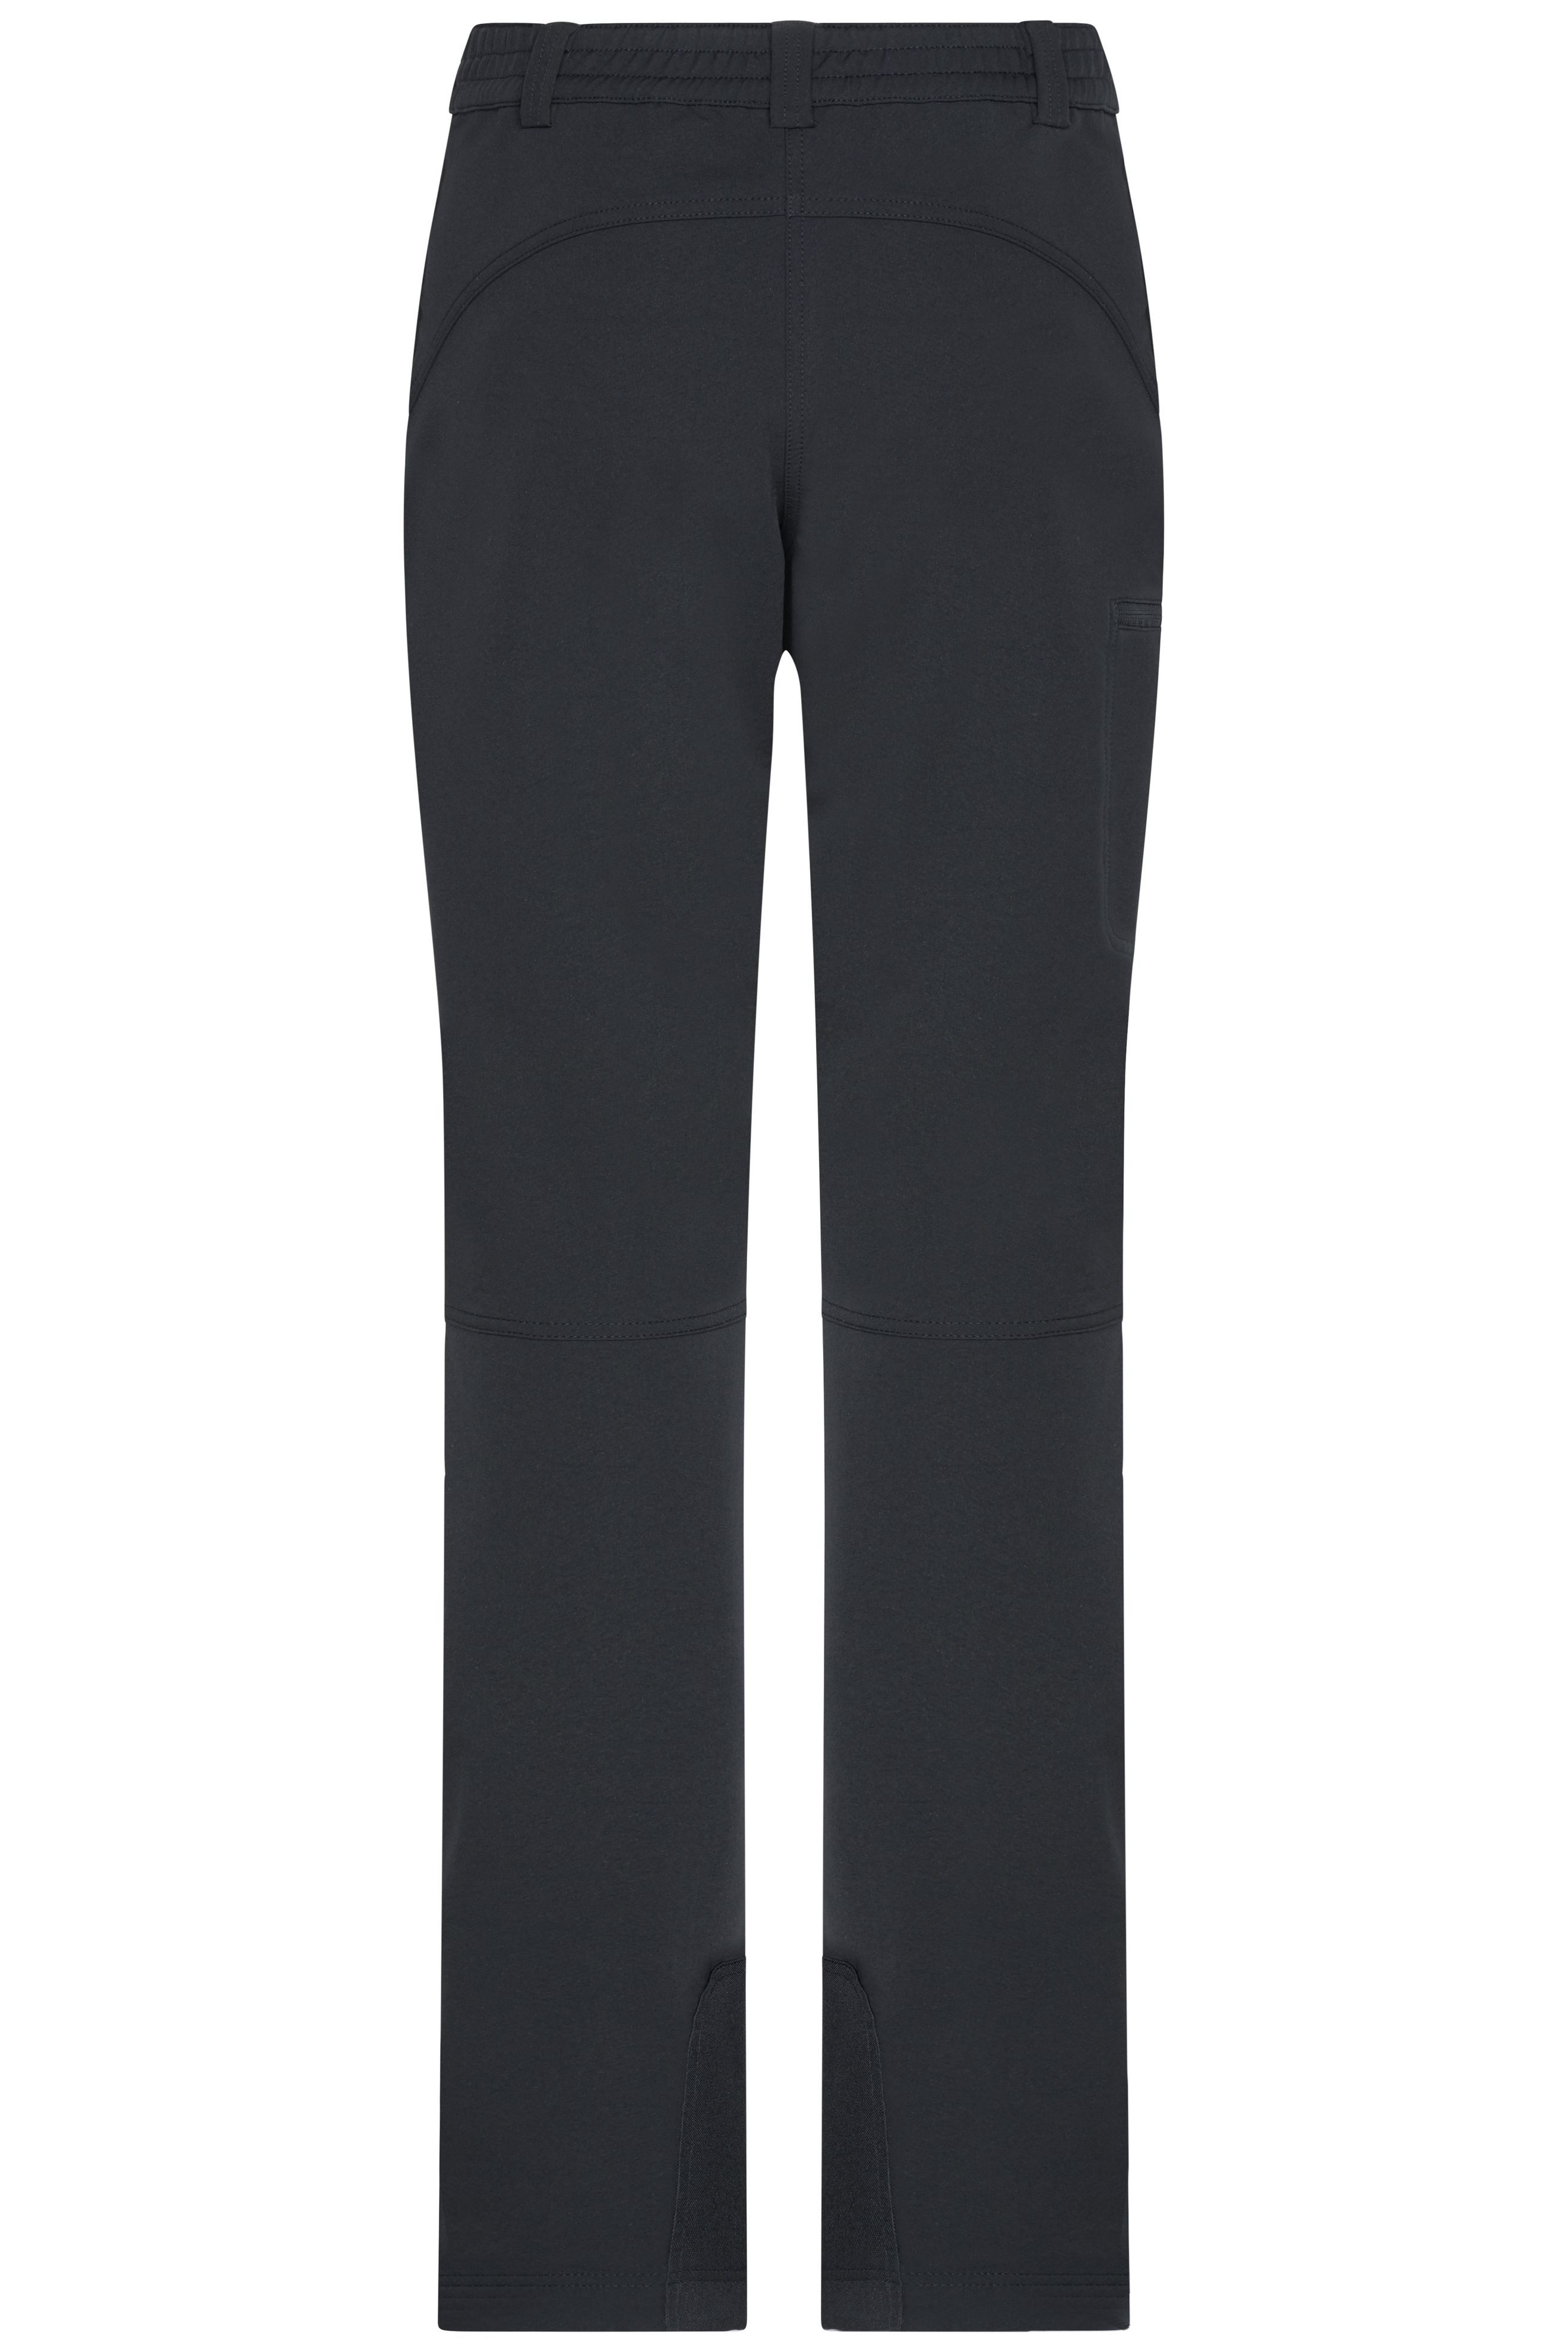 Ladies' Outdoor Pants JN584 Elastische Outdoorhose mit leicht geformter Kniepartie